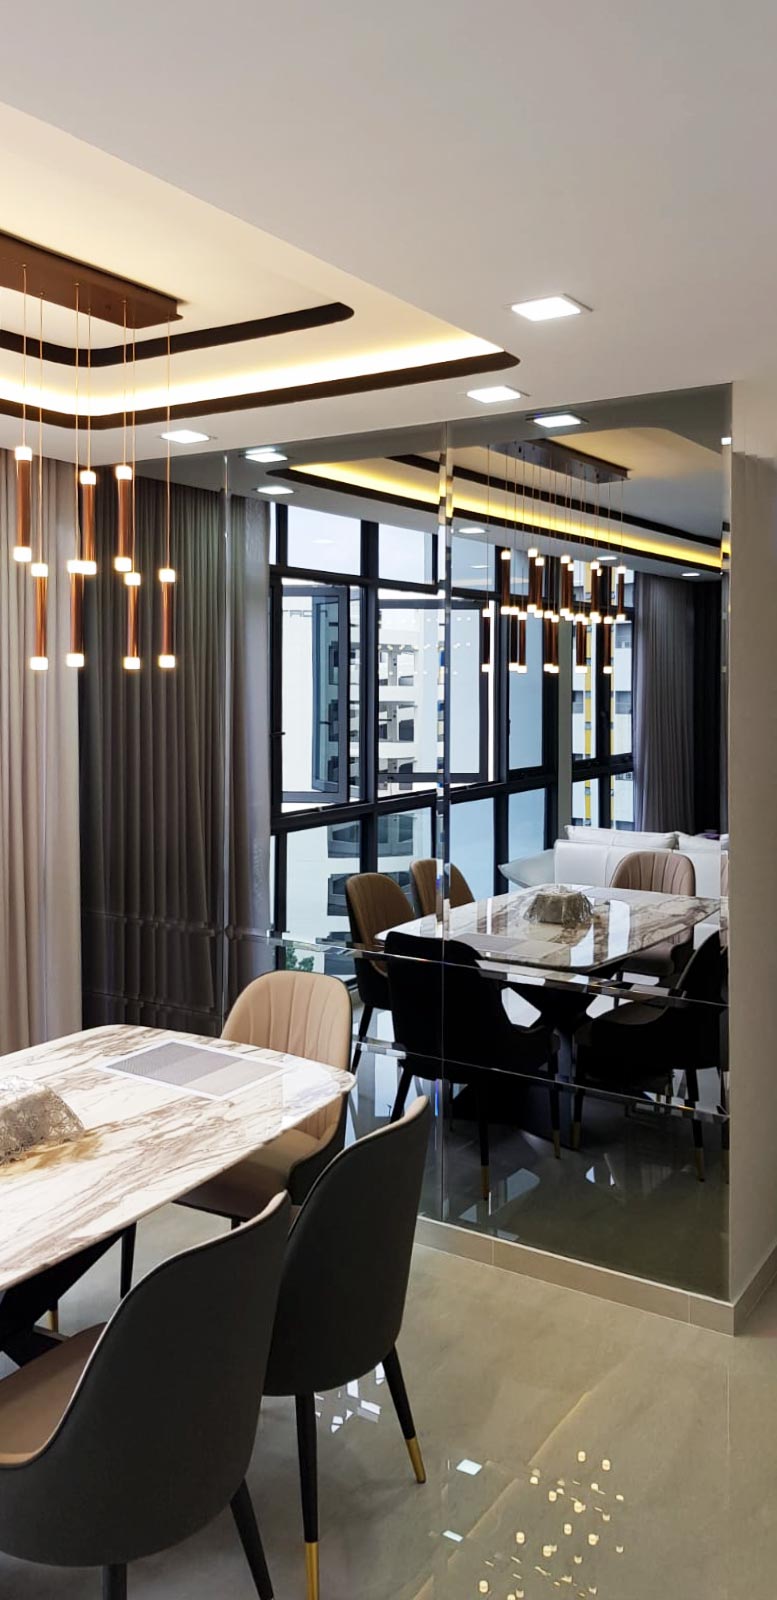 Industrial, Resort Design - Dining Room - Condominium - Design by Sky Creation